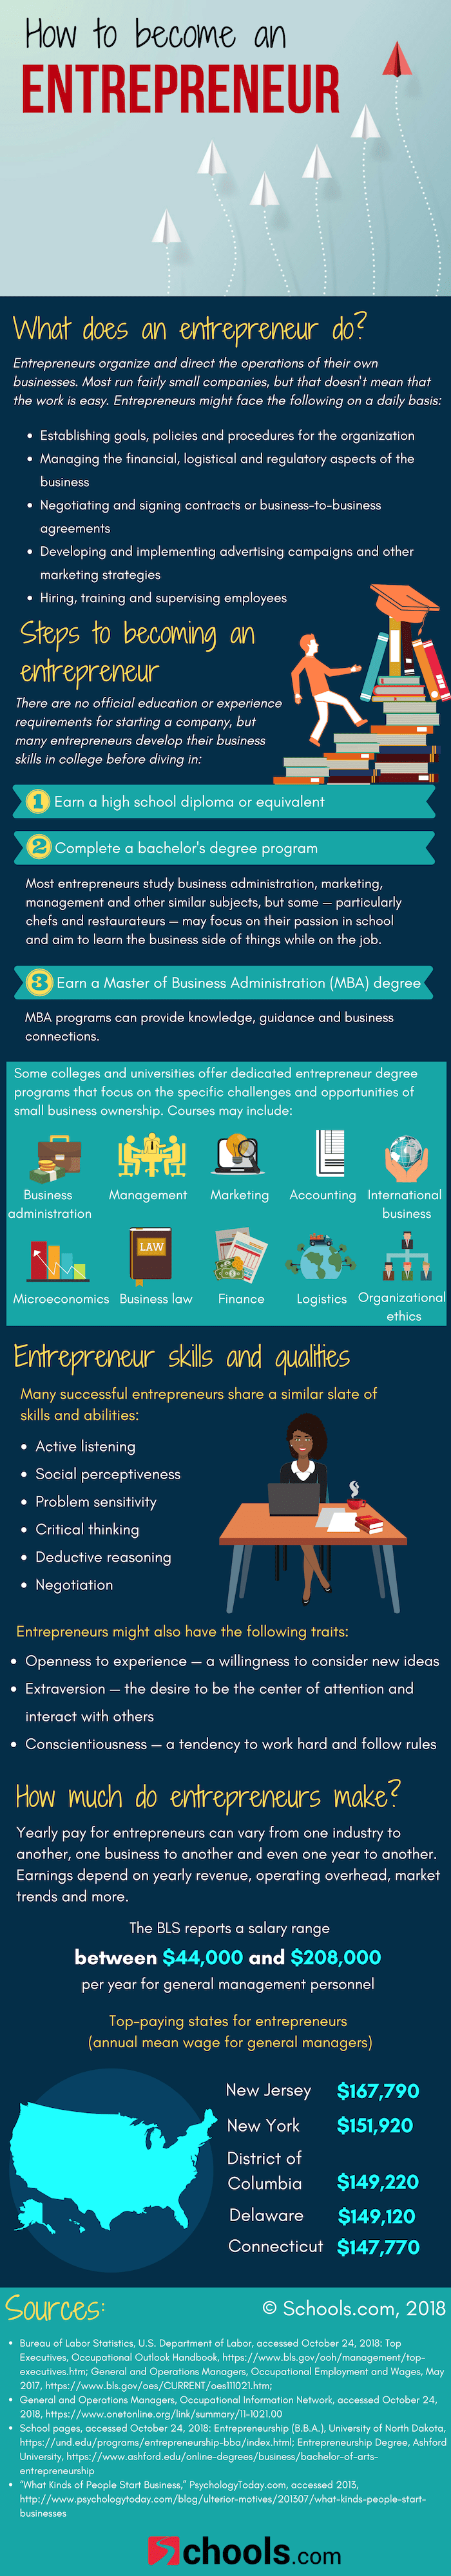 how to become an entrepreneur